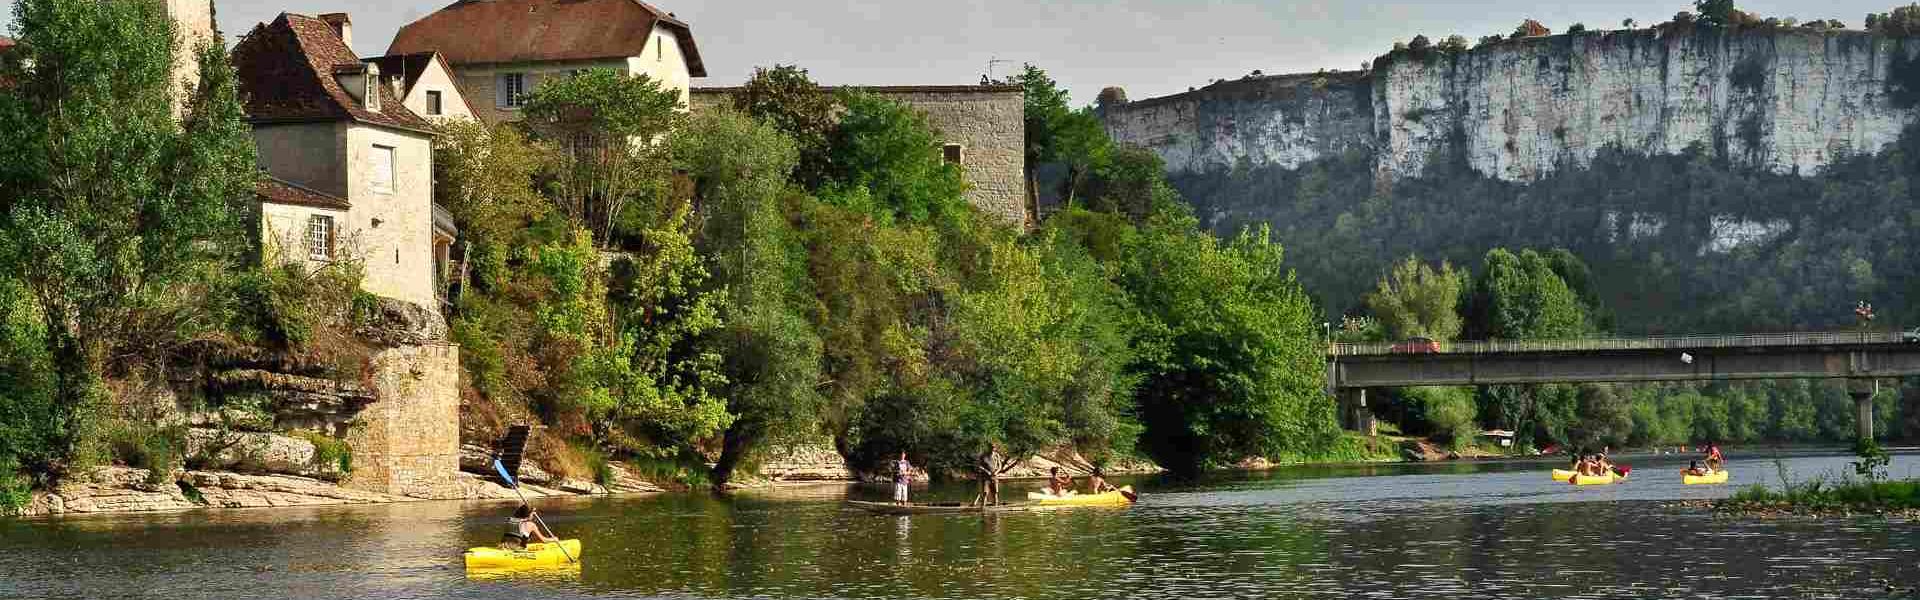 Canoe Dordogne @Lot Tourisme_C. ORY